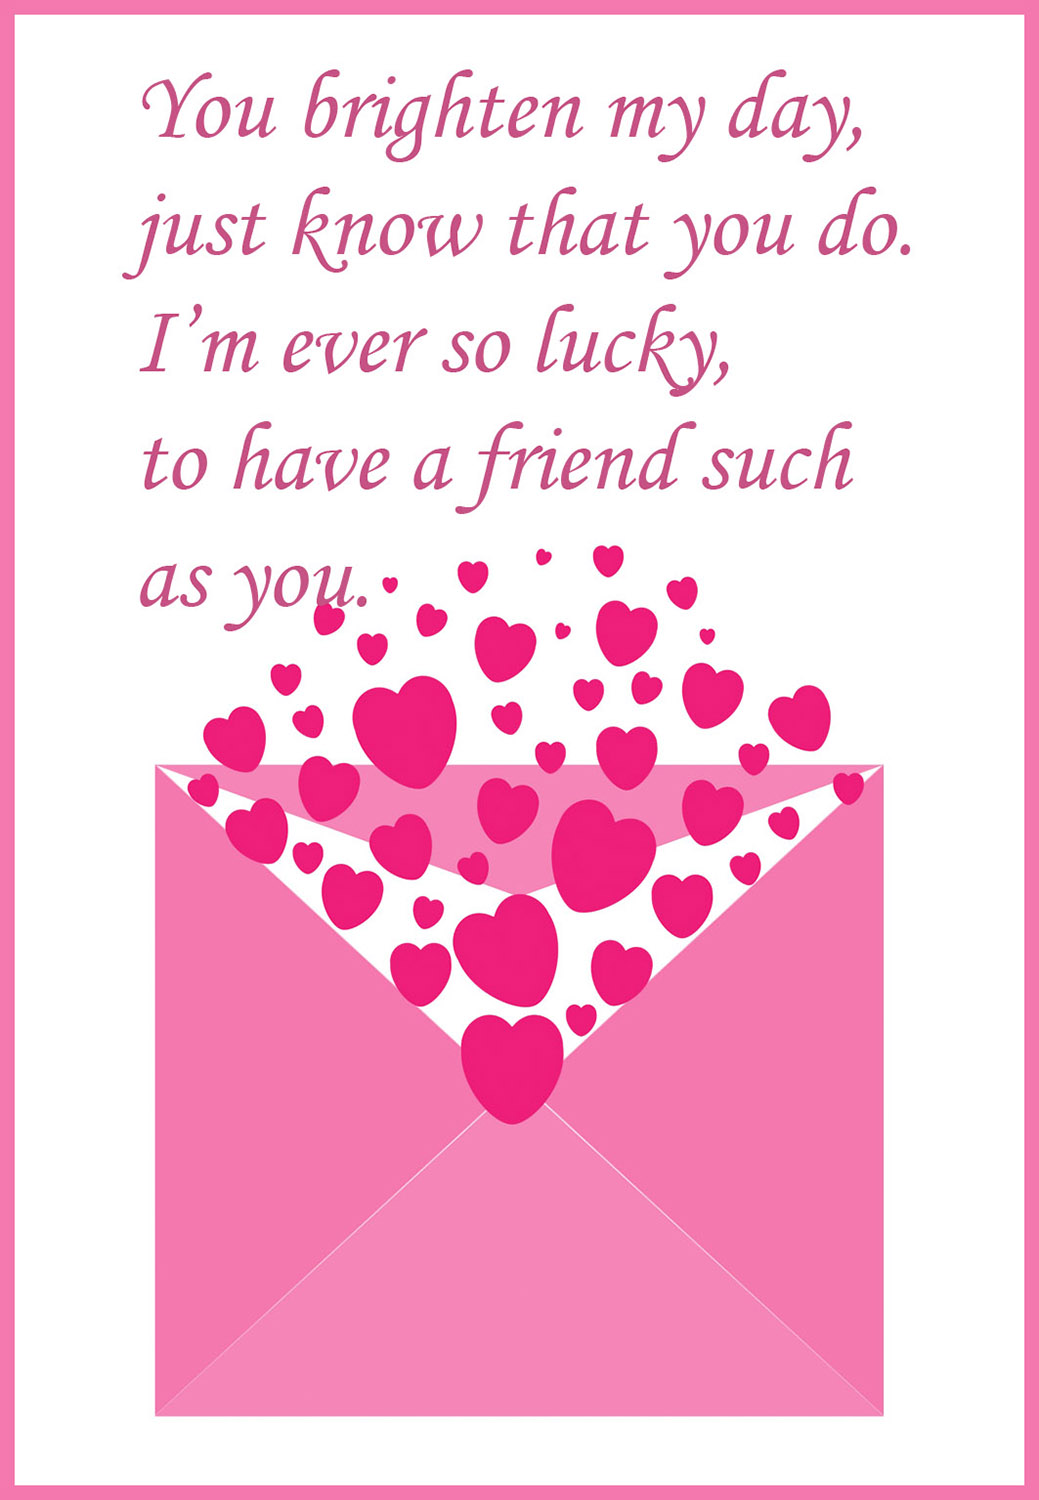 Printable Valentine Cards | Free Printable Greeting Cards1039 x 1500